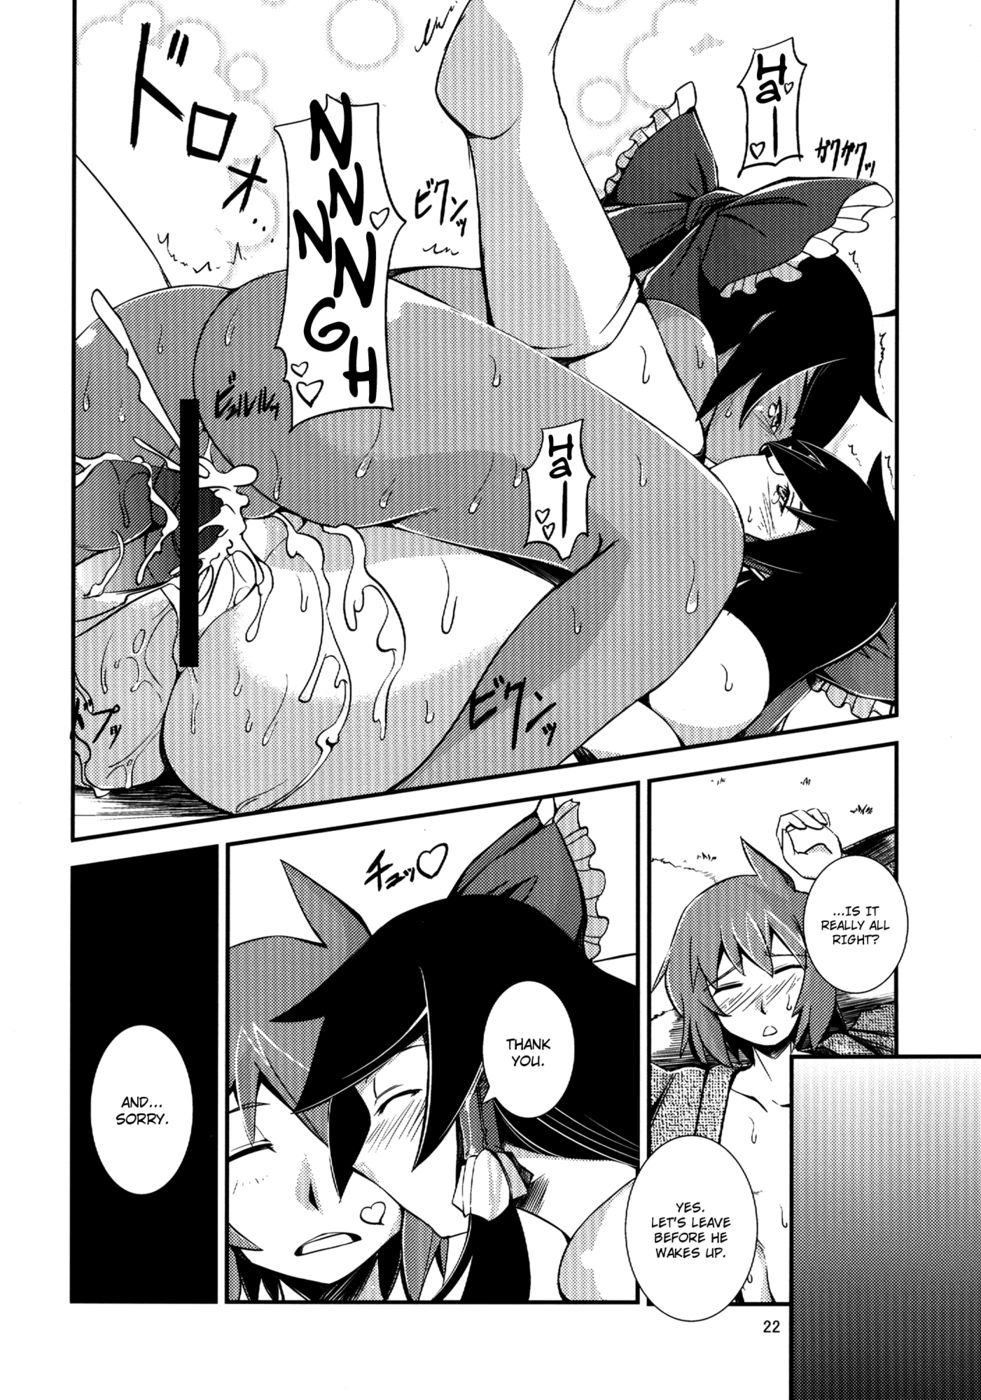 Hentai Manga Comic-The Incident of the Black Shrine Maiden-Chapter 3-20